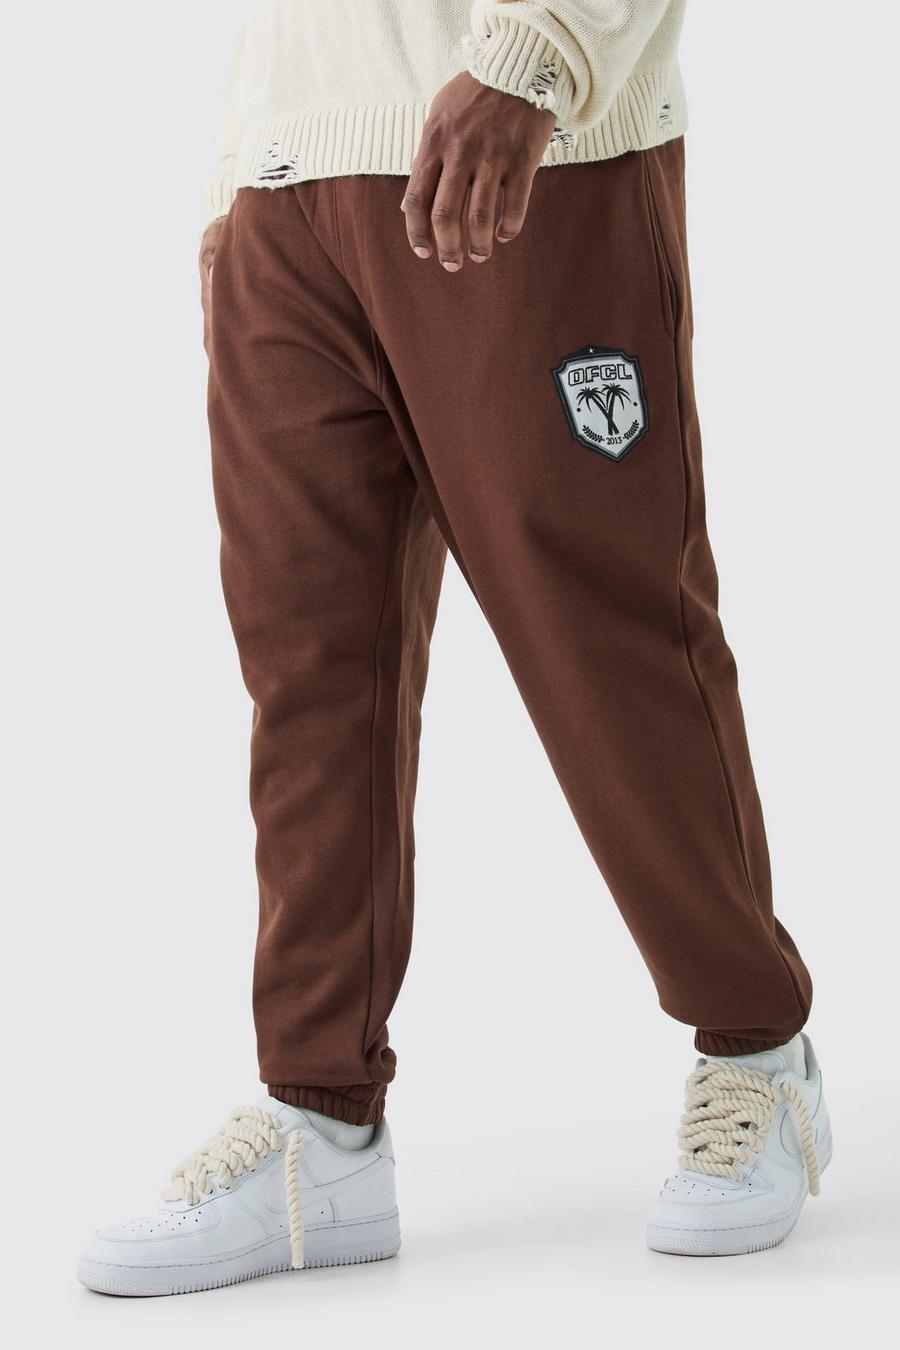 Pantaloni tuta Plus Size Core Team Ofcl color cioccolato, Chocolate image number 1